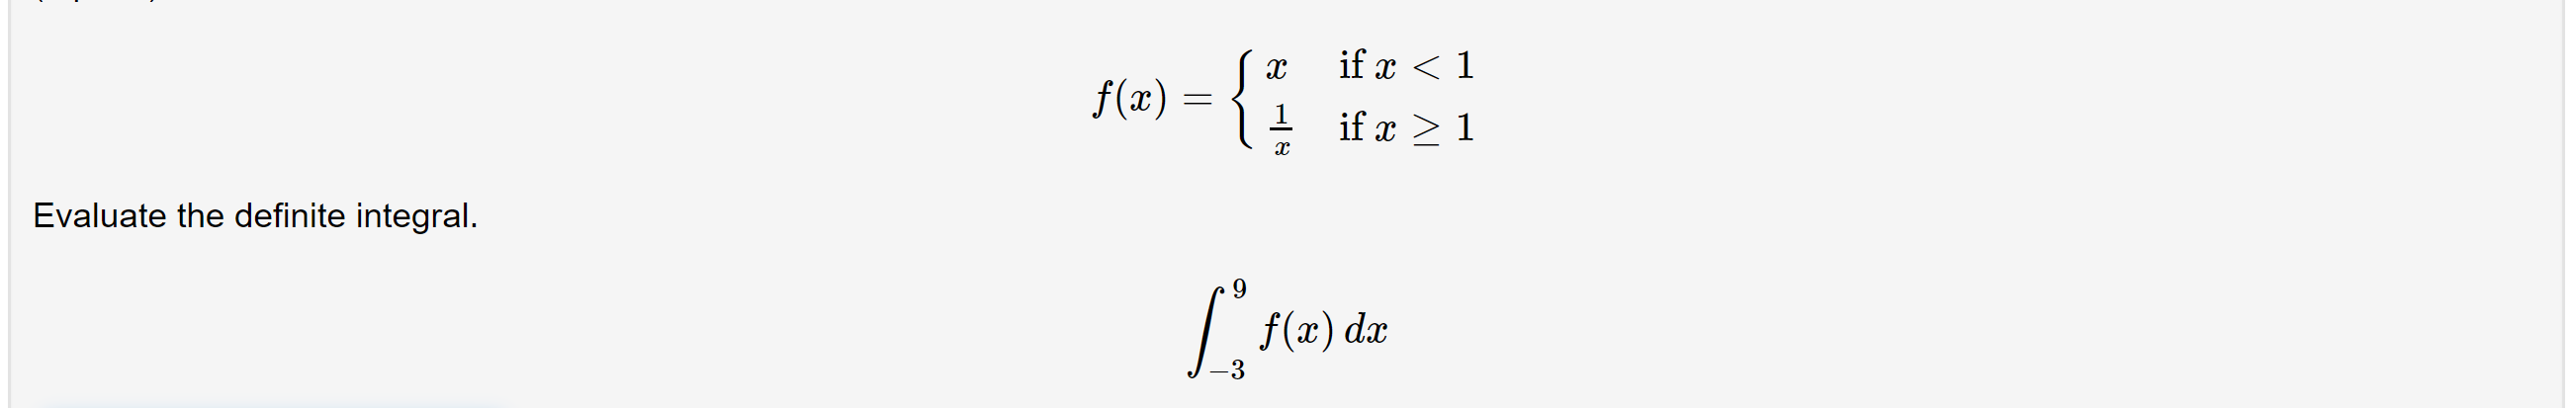 if x < 1
f(æ)
! if x > 1
Evaluate the definite integral.
f(æ).
dæ
